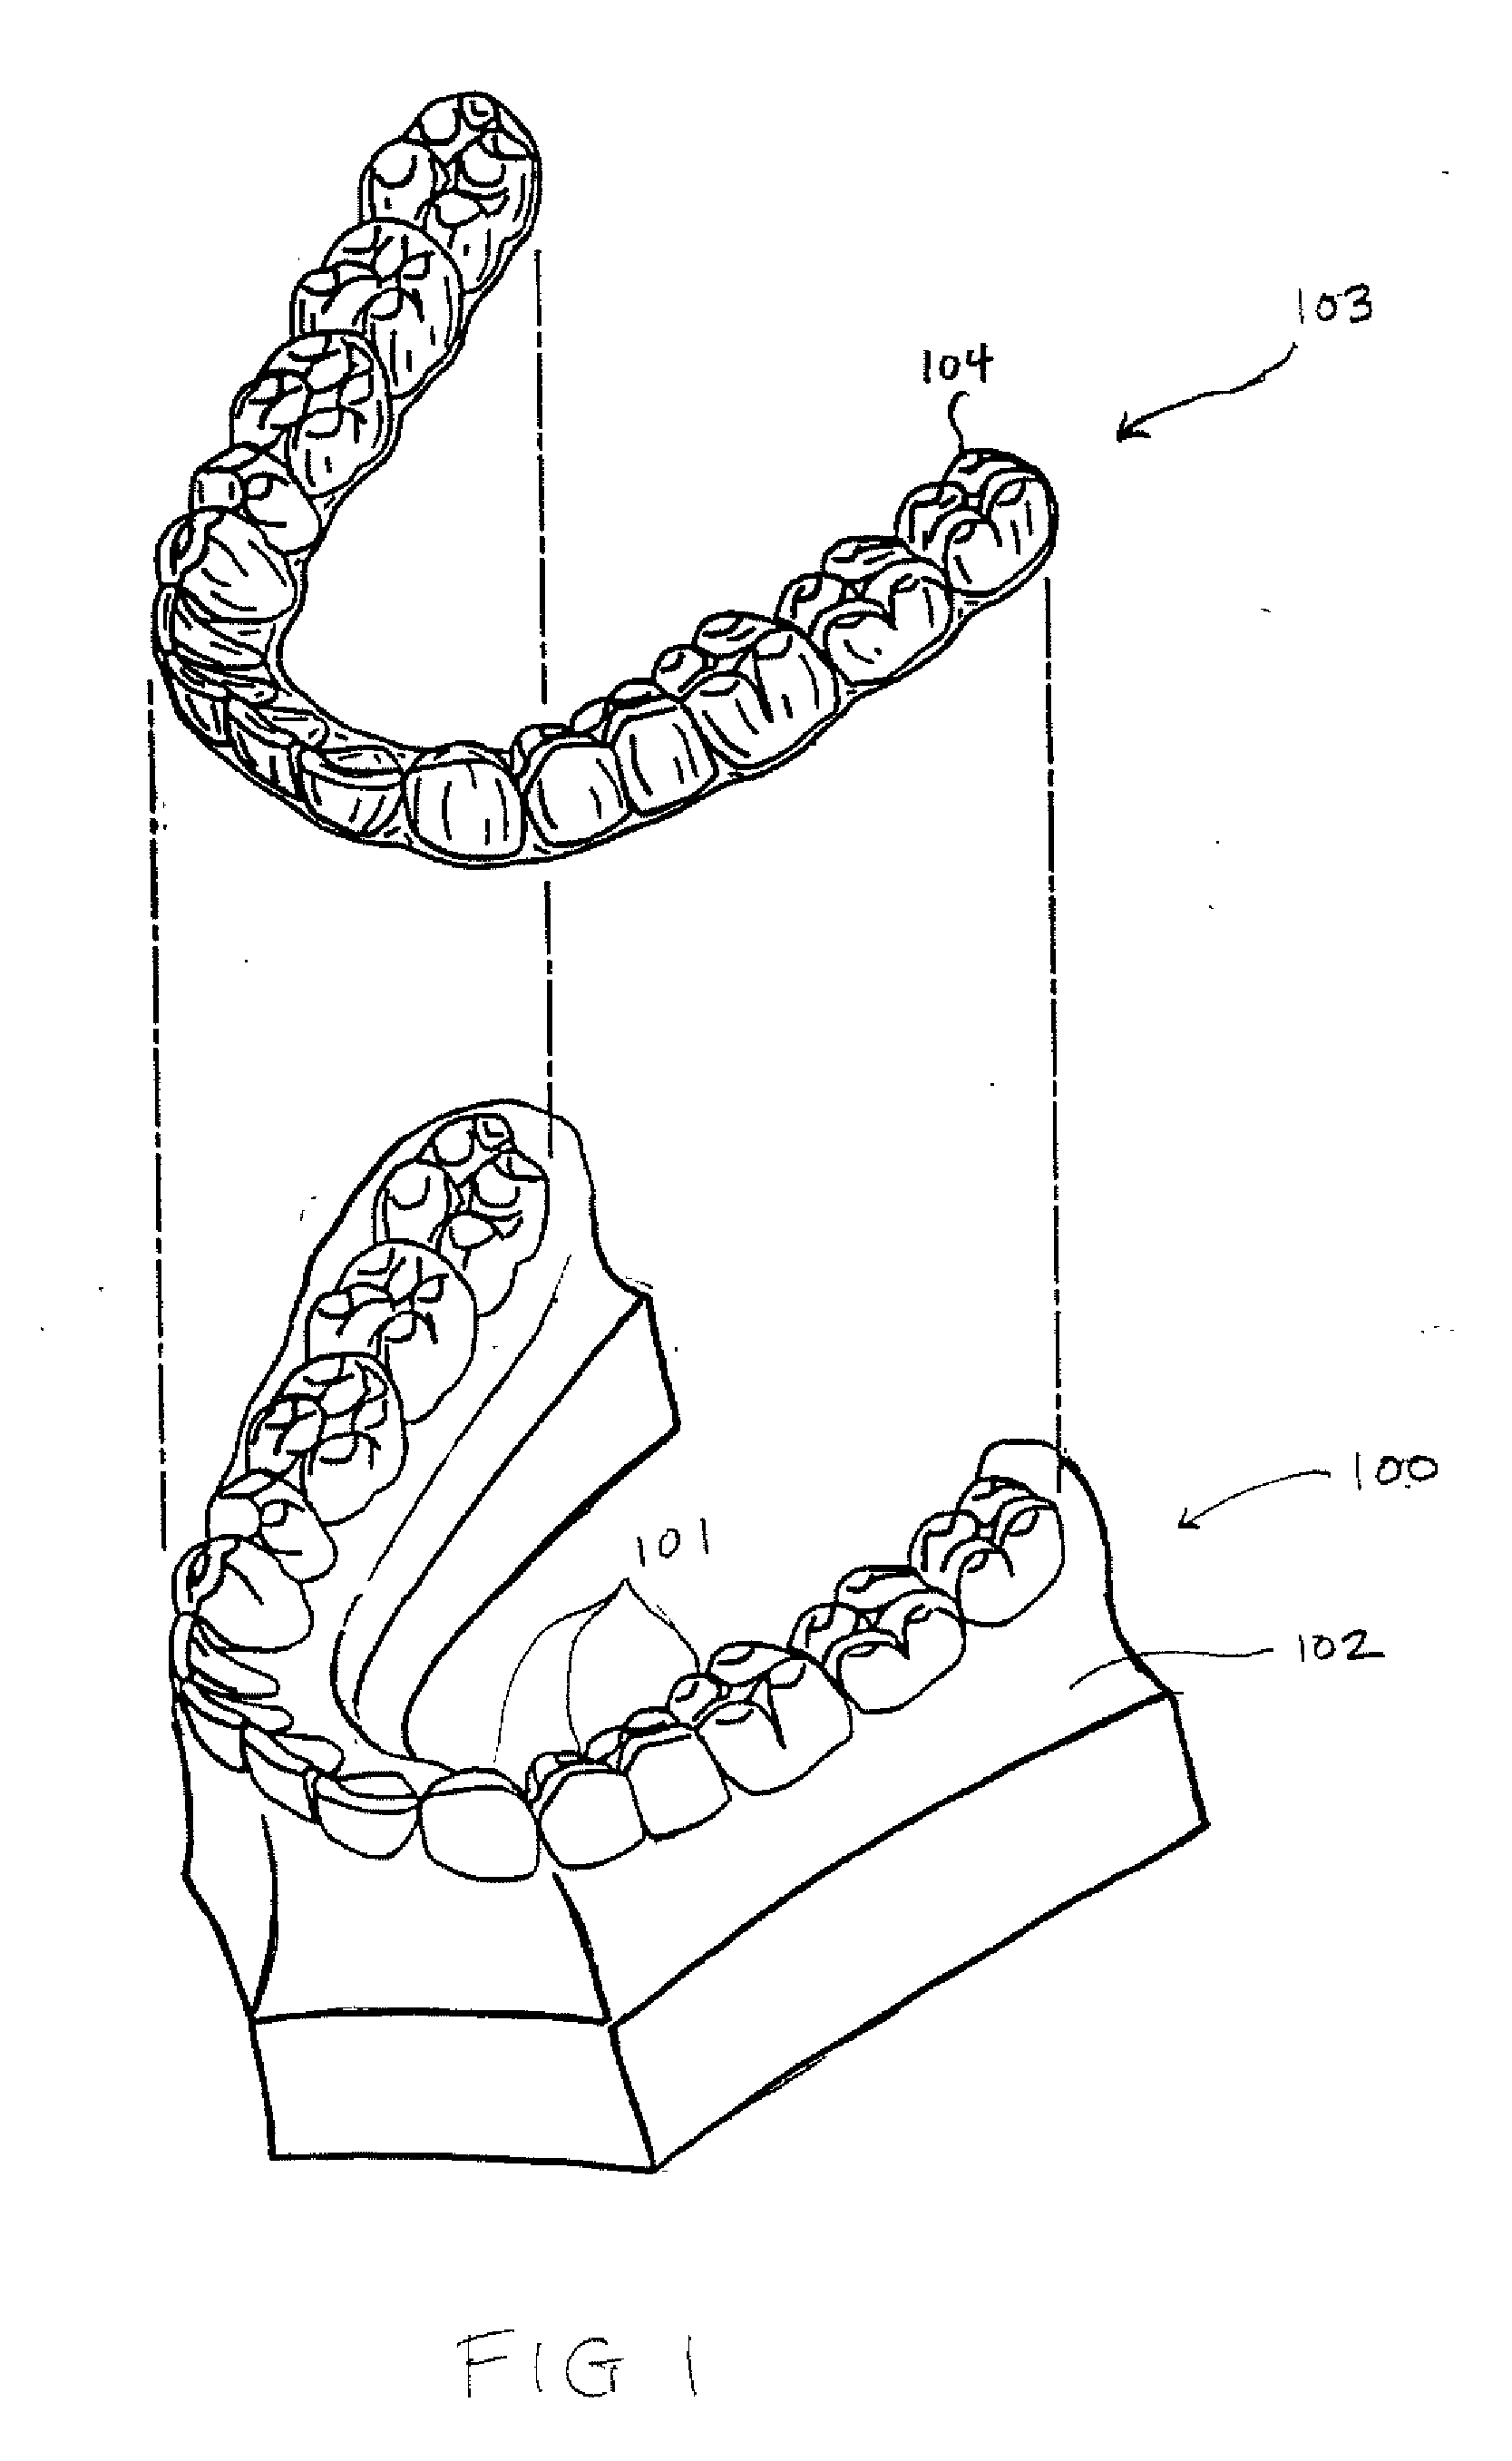 Reconfigurable dental model system for fabrication of dental appliances